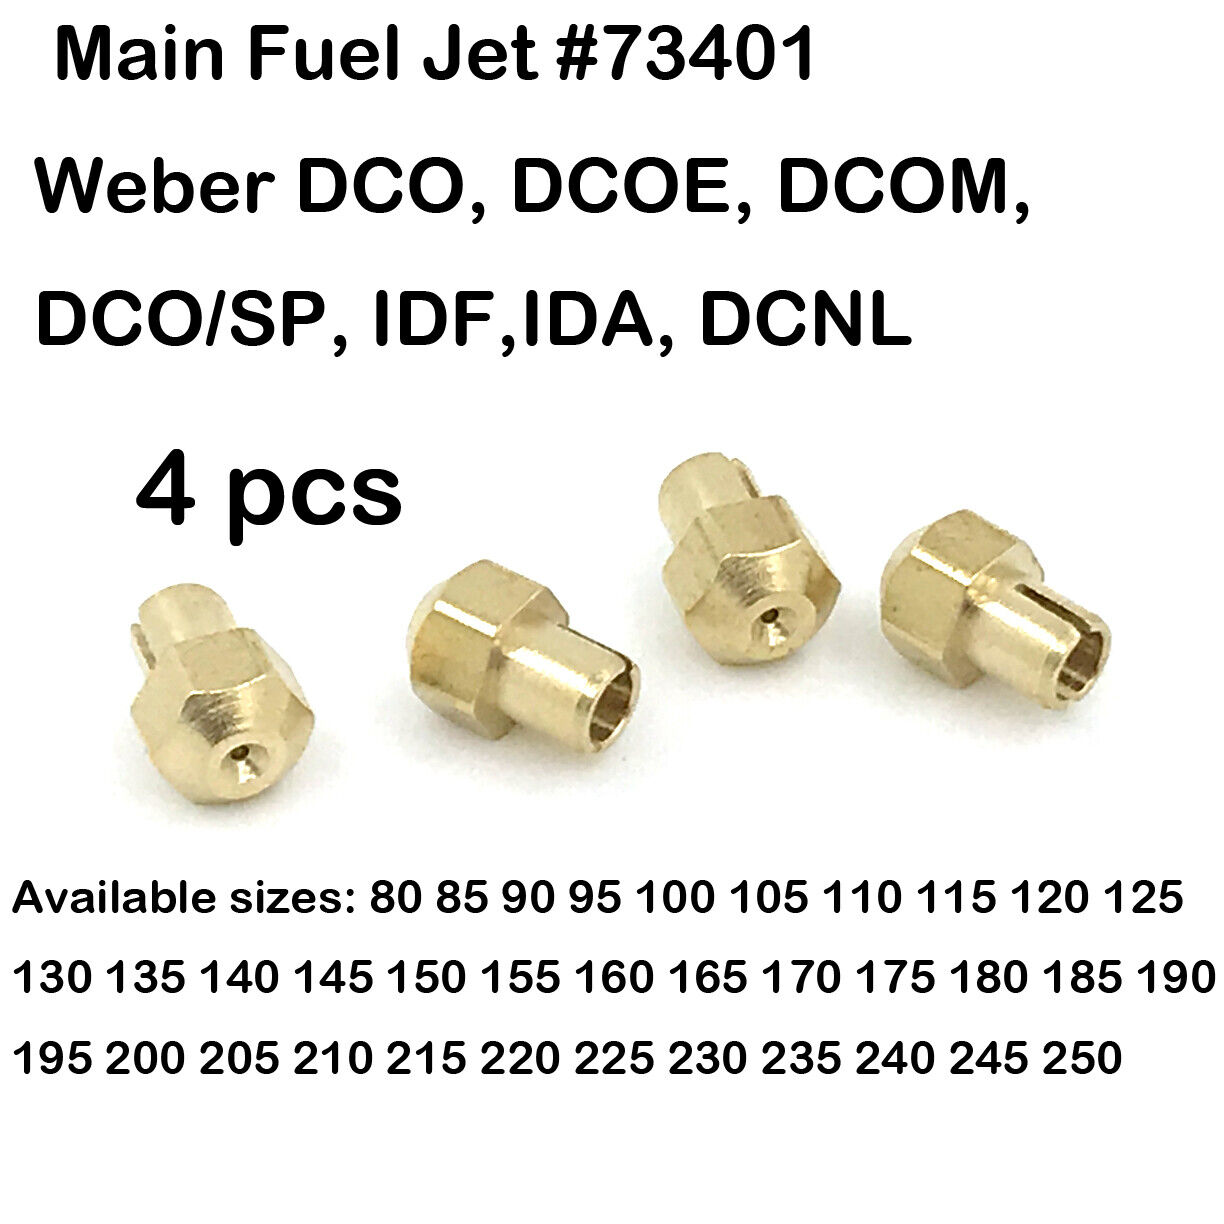 Main Jets #73401 For Weber DCOE, IDA, IDF Carburetors choose size 80-250 4 pcs